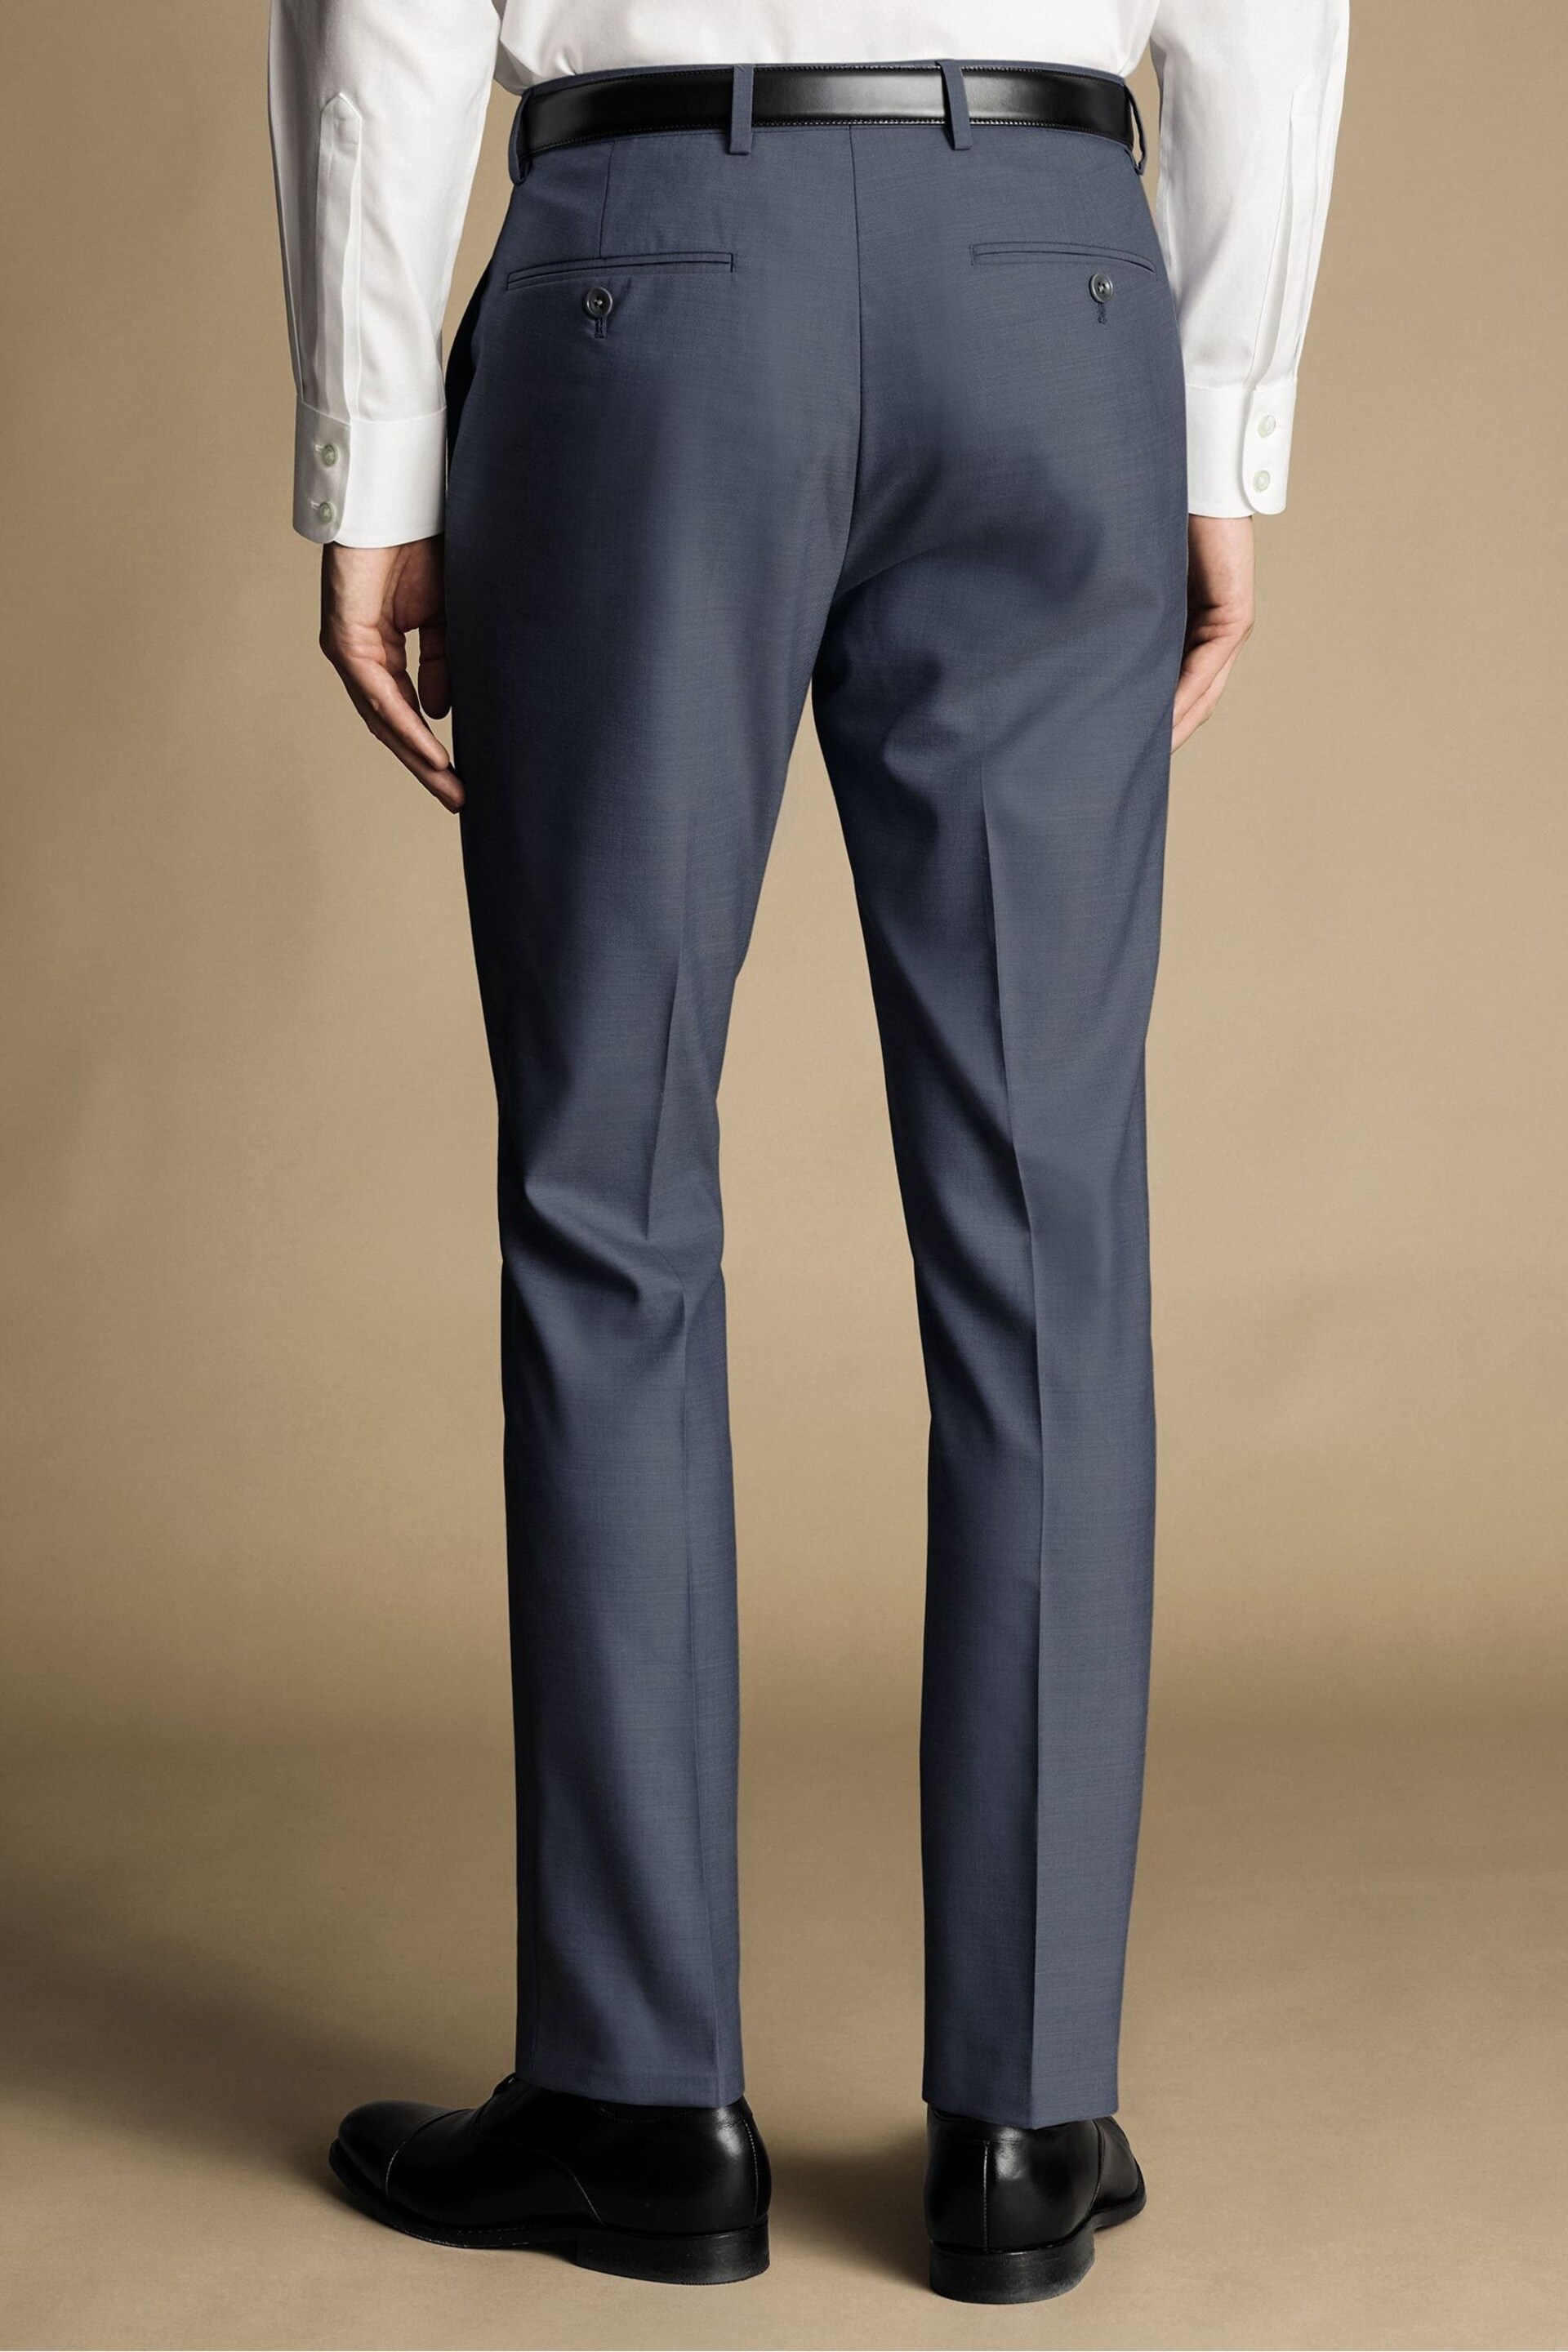 Charles Tyrwhitt Blue Slim Fit Sharkskin Ultimate Performance Suit Trousers - Image 3 of 4